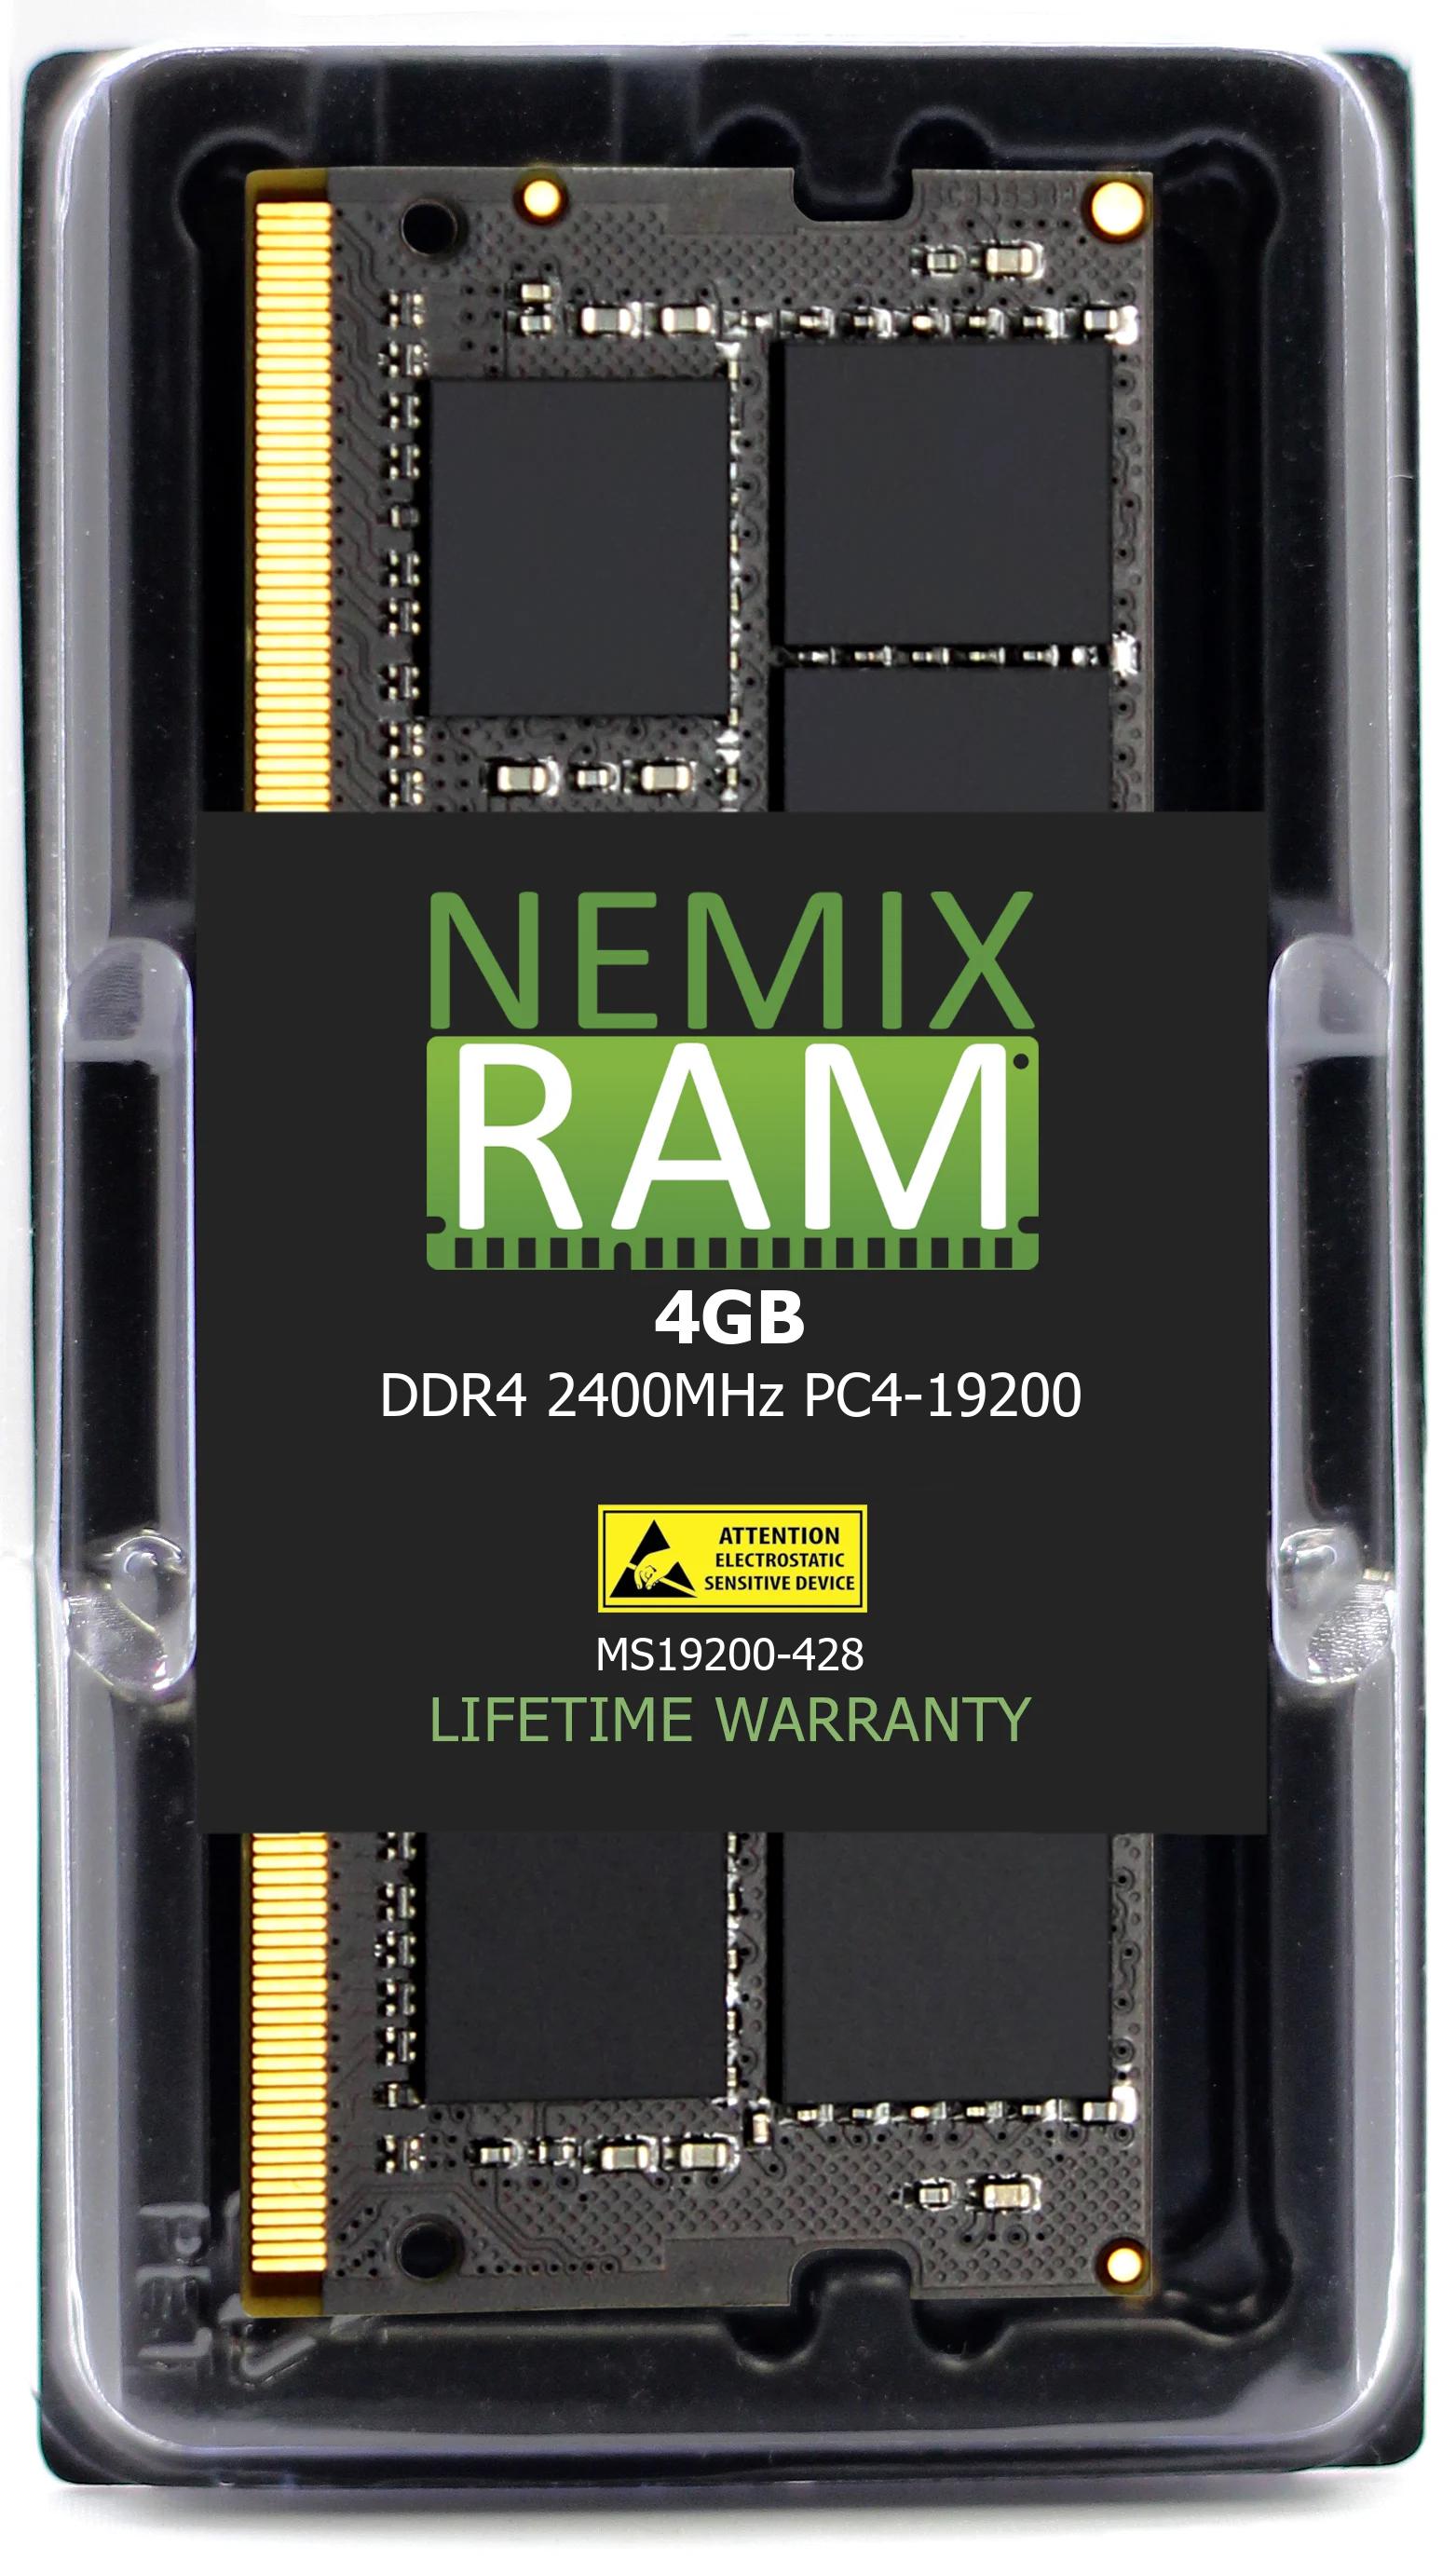 NEMIX RAM Memory Upgrade equivalent to ASUSTOR AS-4GD4 92M11-S4D40  SODIMM Memory module